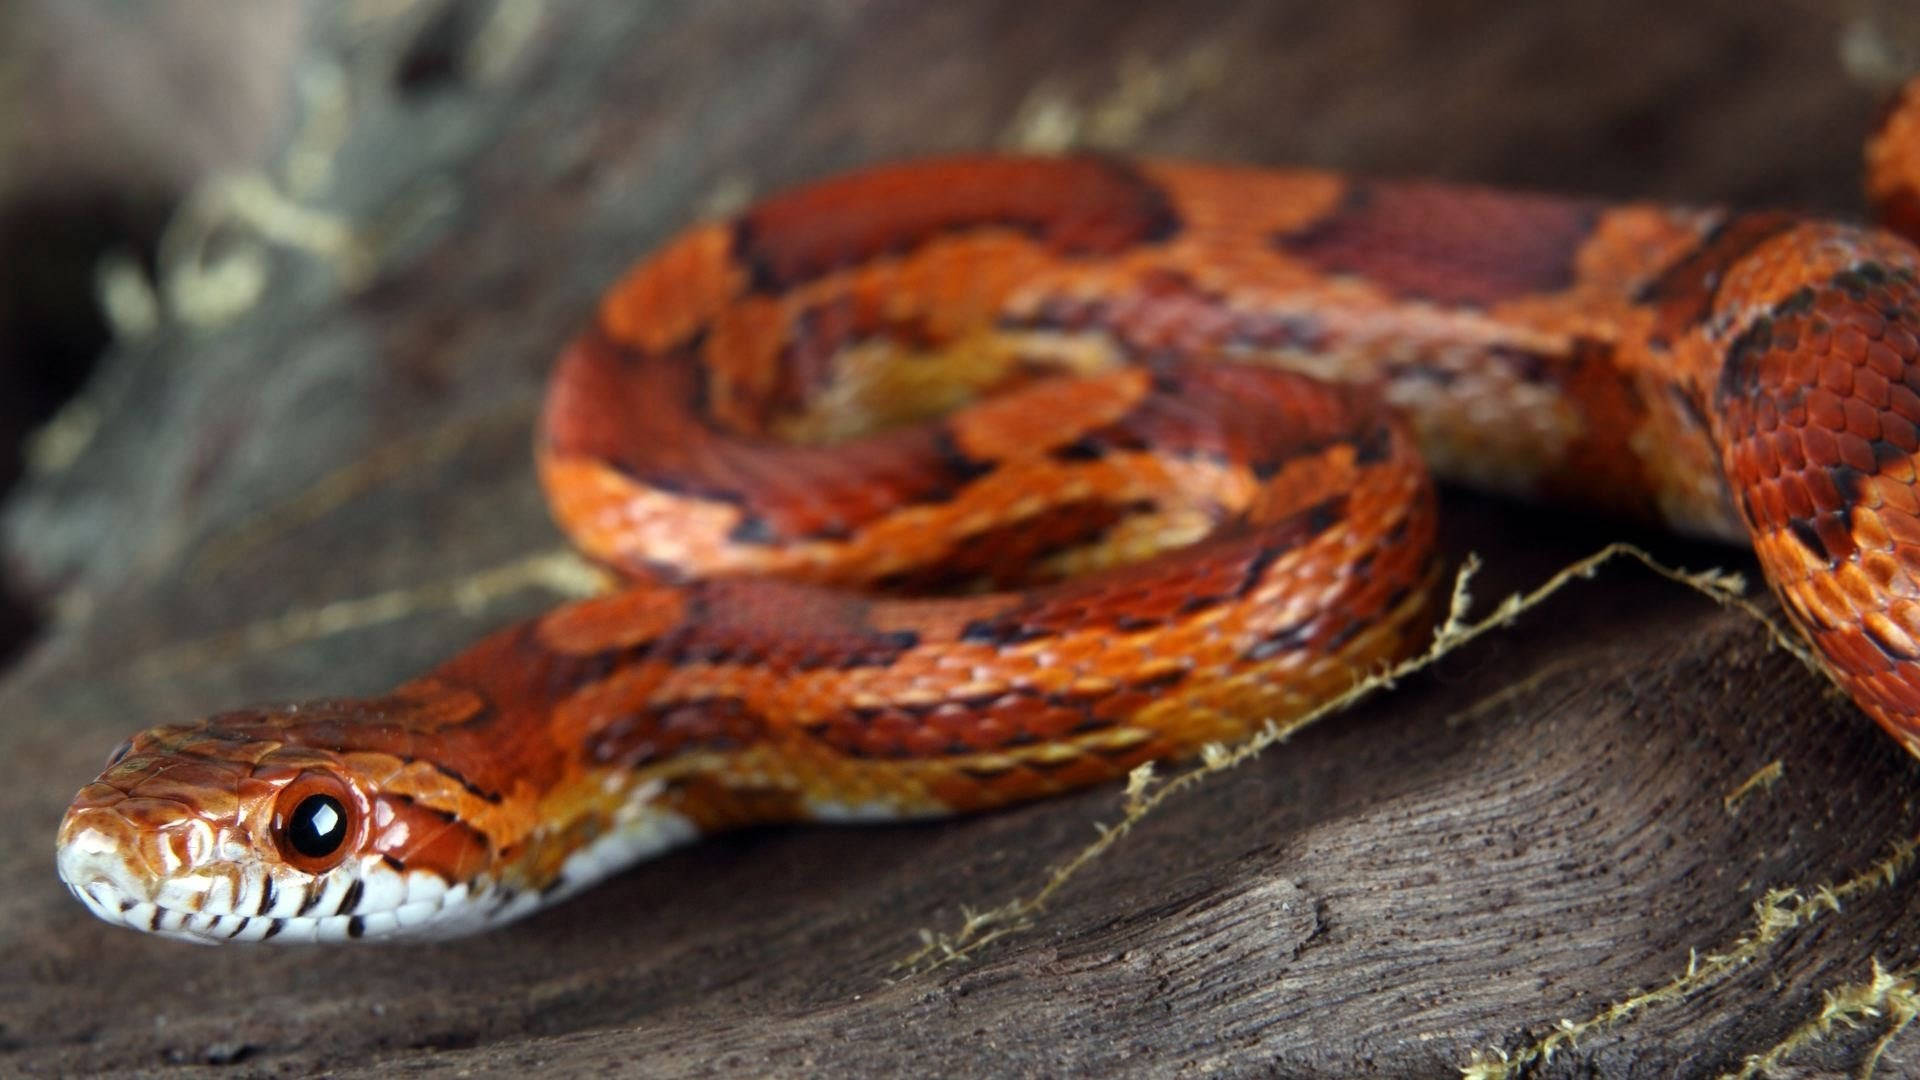 Majestic Darker-Colored Corn Snake in its Natural Habitat Wallpaper